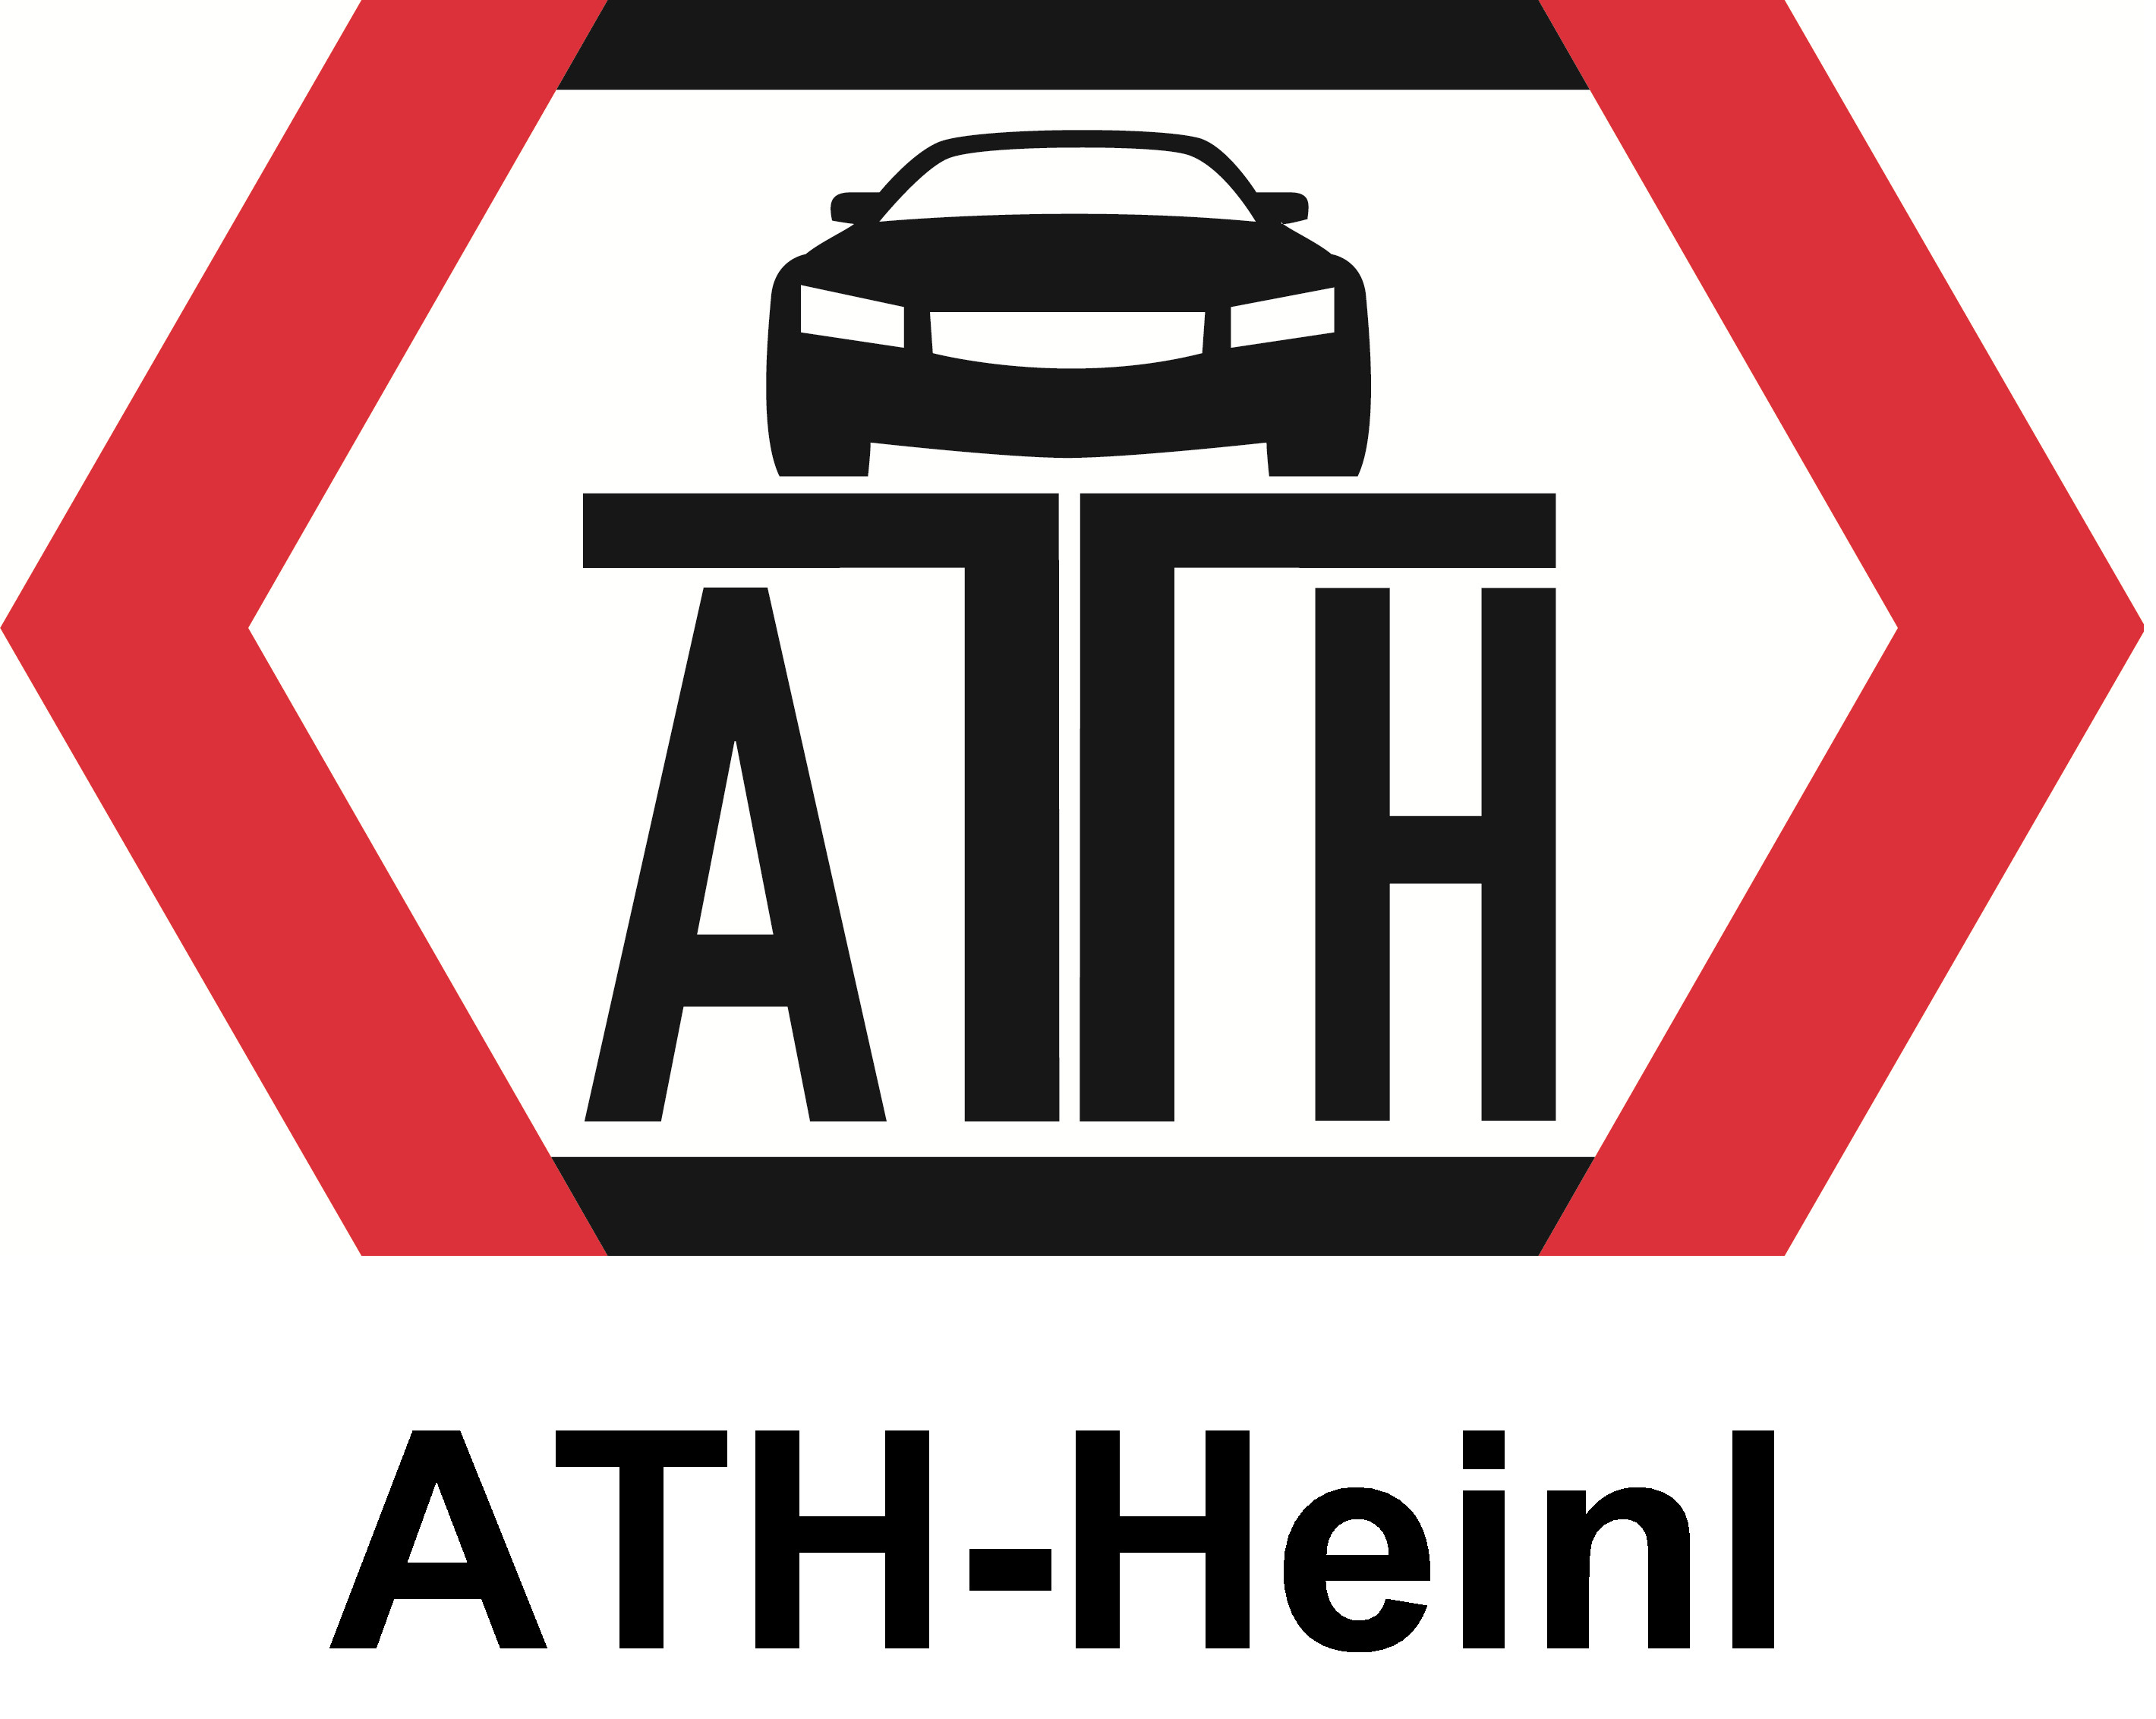 ATH-Four Lift 64AP